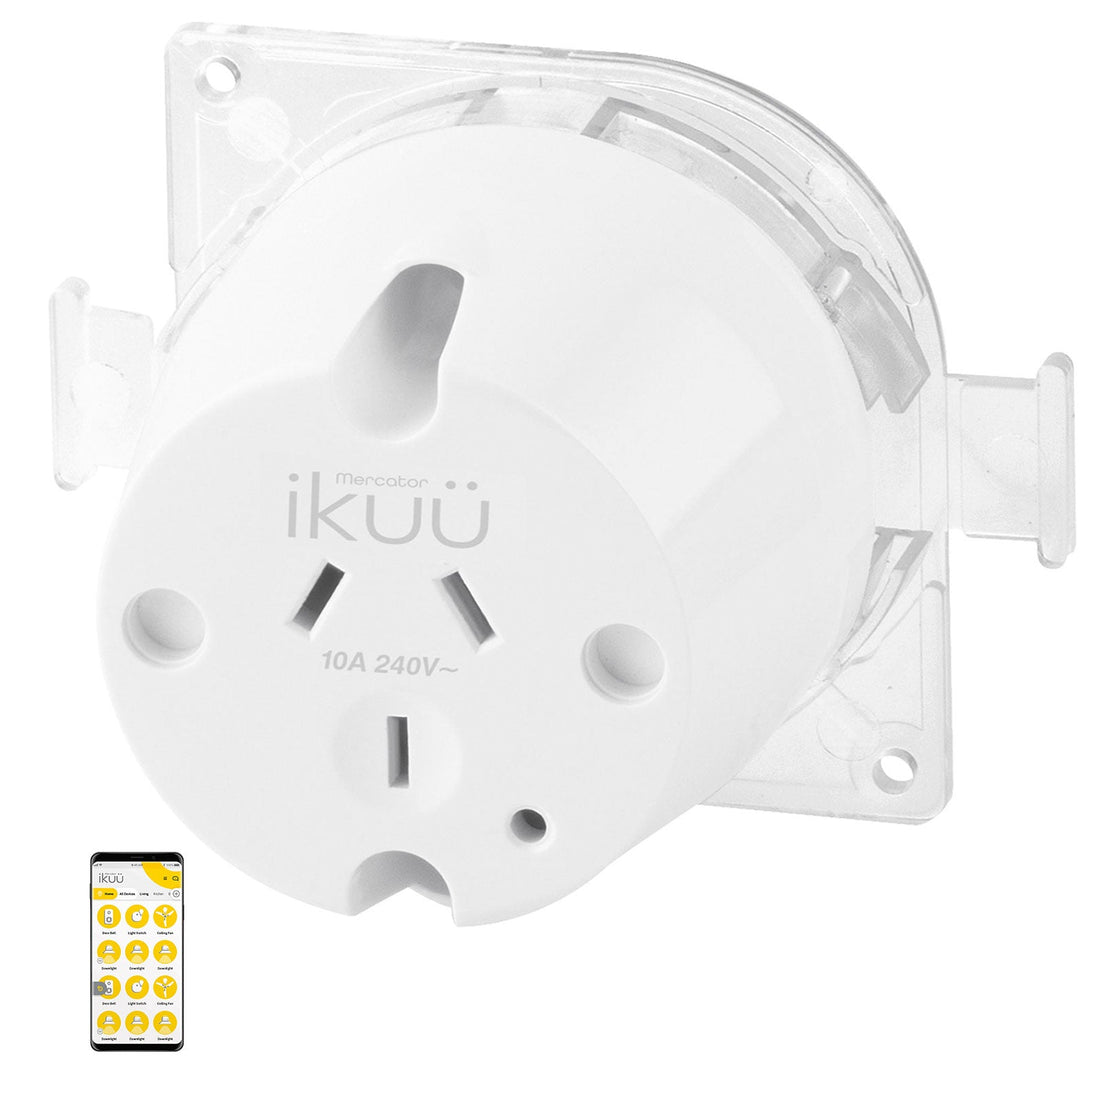 Ikuü Smart Zigbee Plug Base With Clear Rear Cover